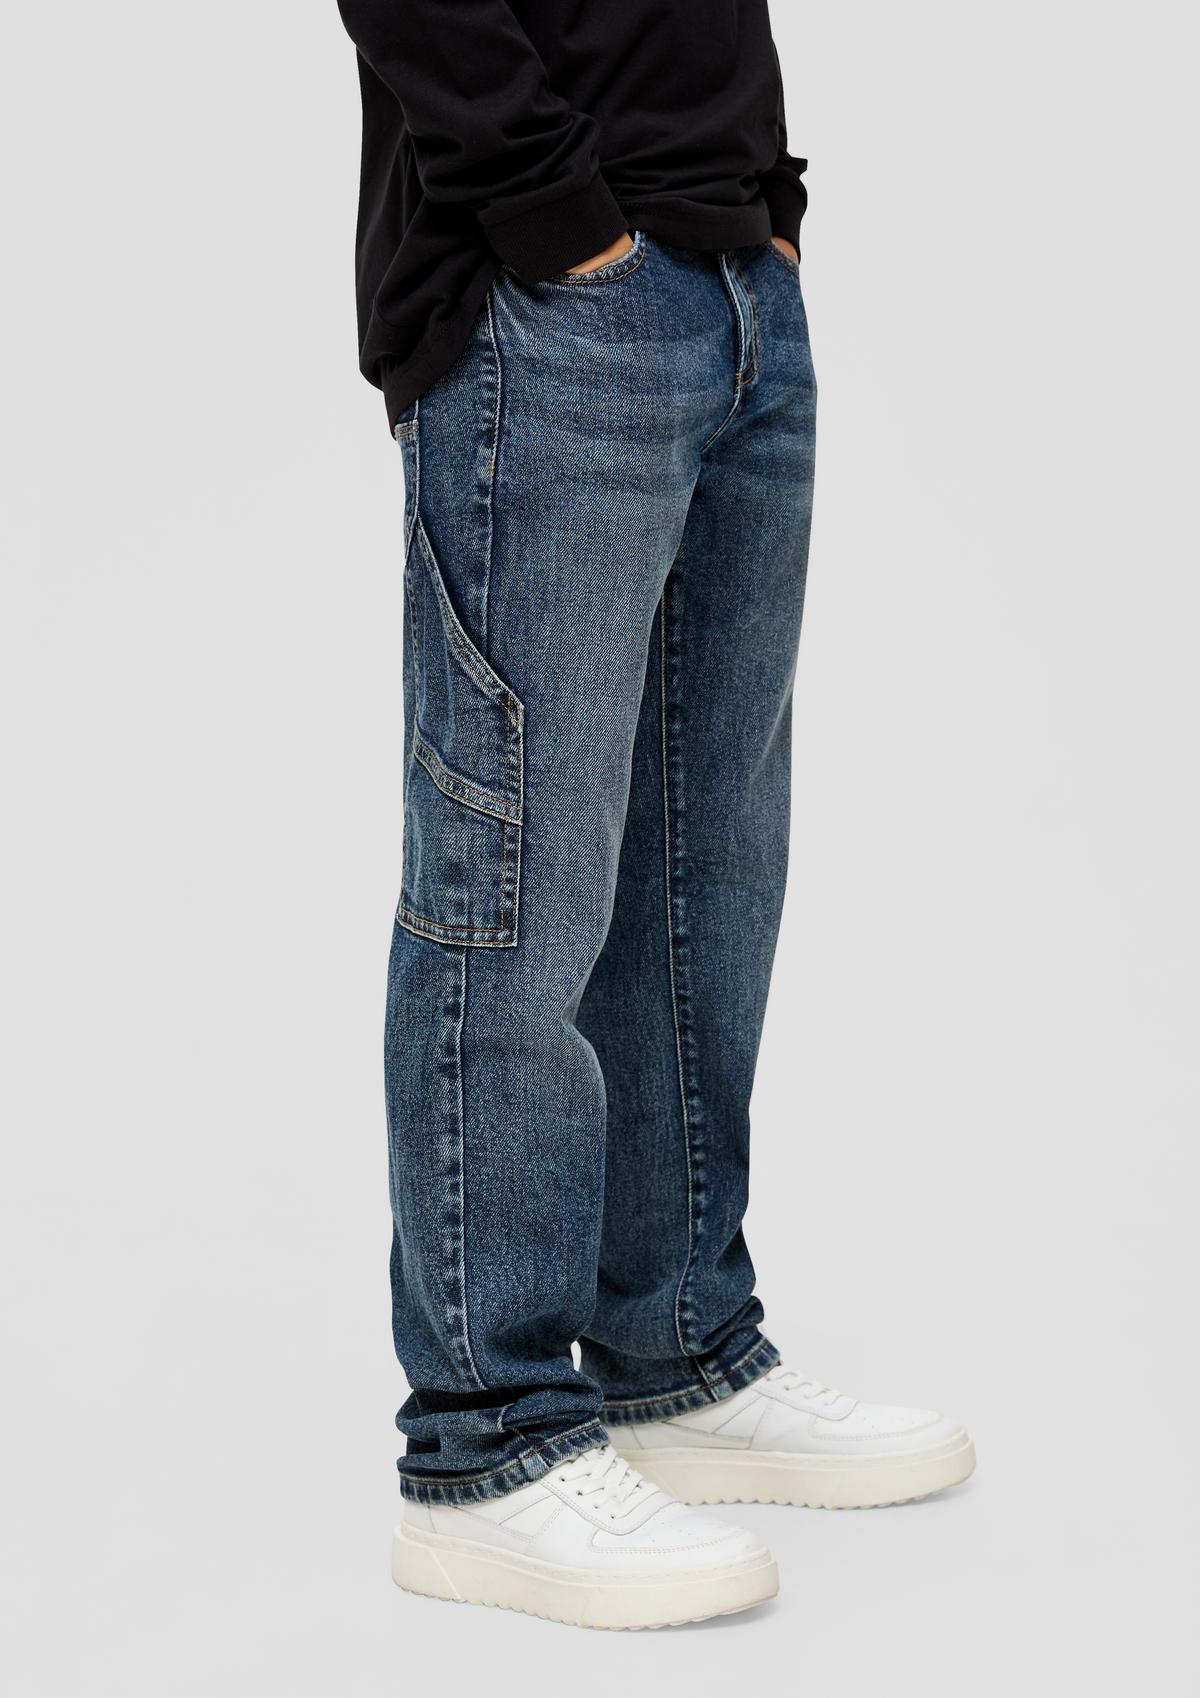 s.Oliver Jeans Pete / Regular Fit / Mid Rise / Slim Leg